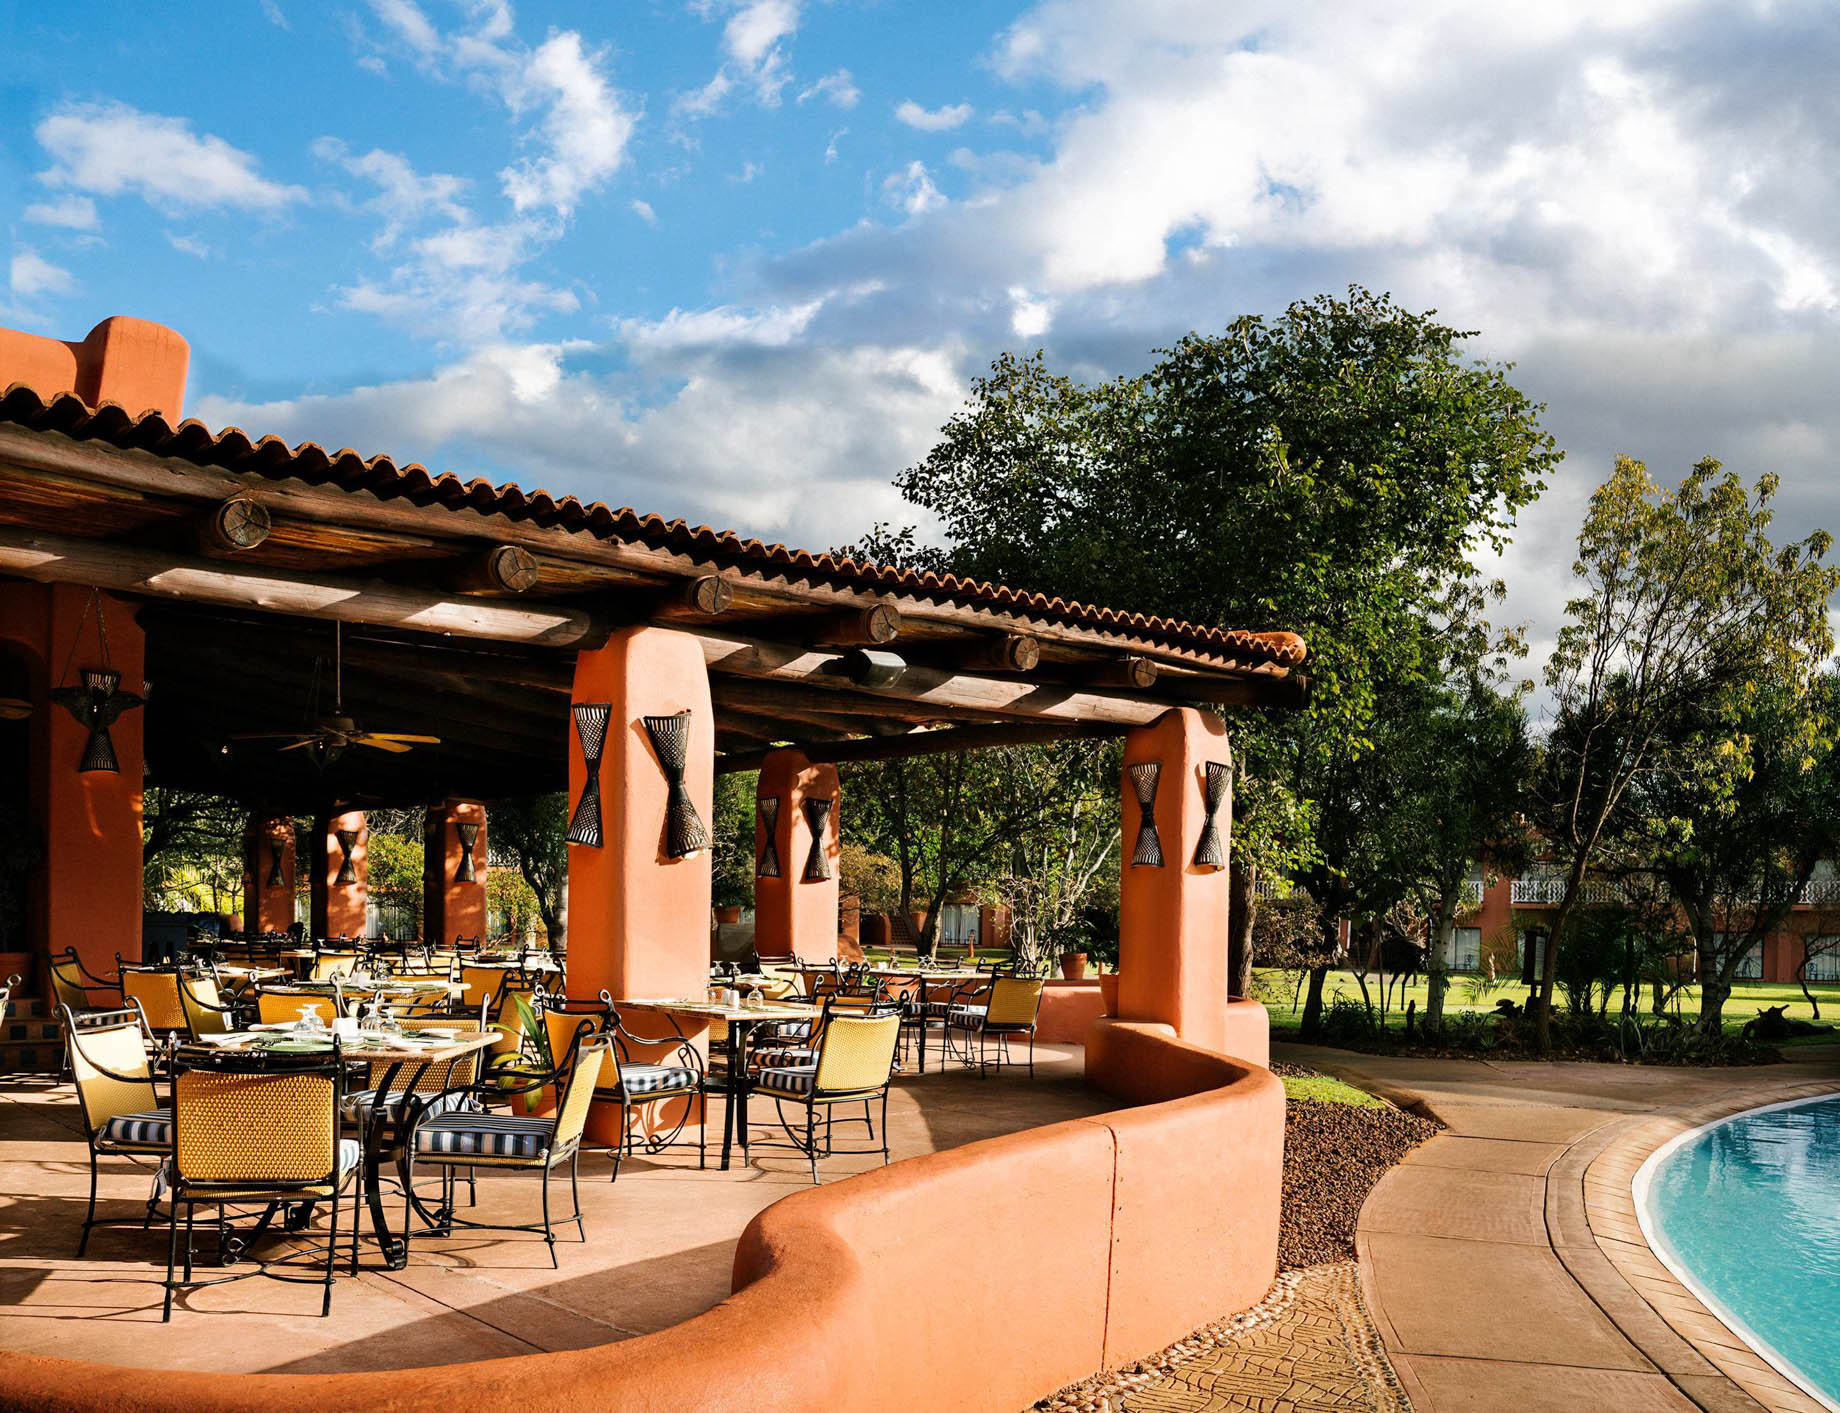 Avani Victoria Falls Resort – Livingstone, Zambia – Restaurant